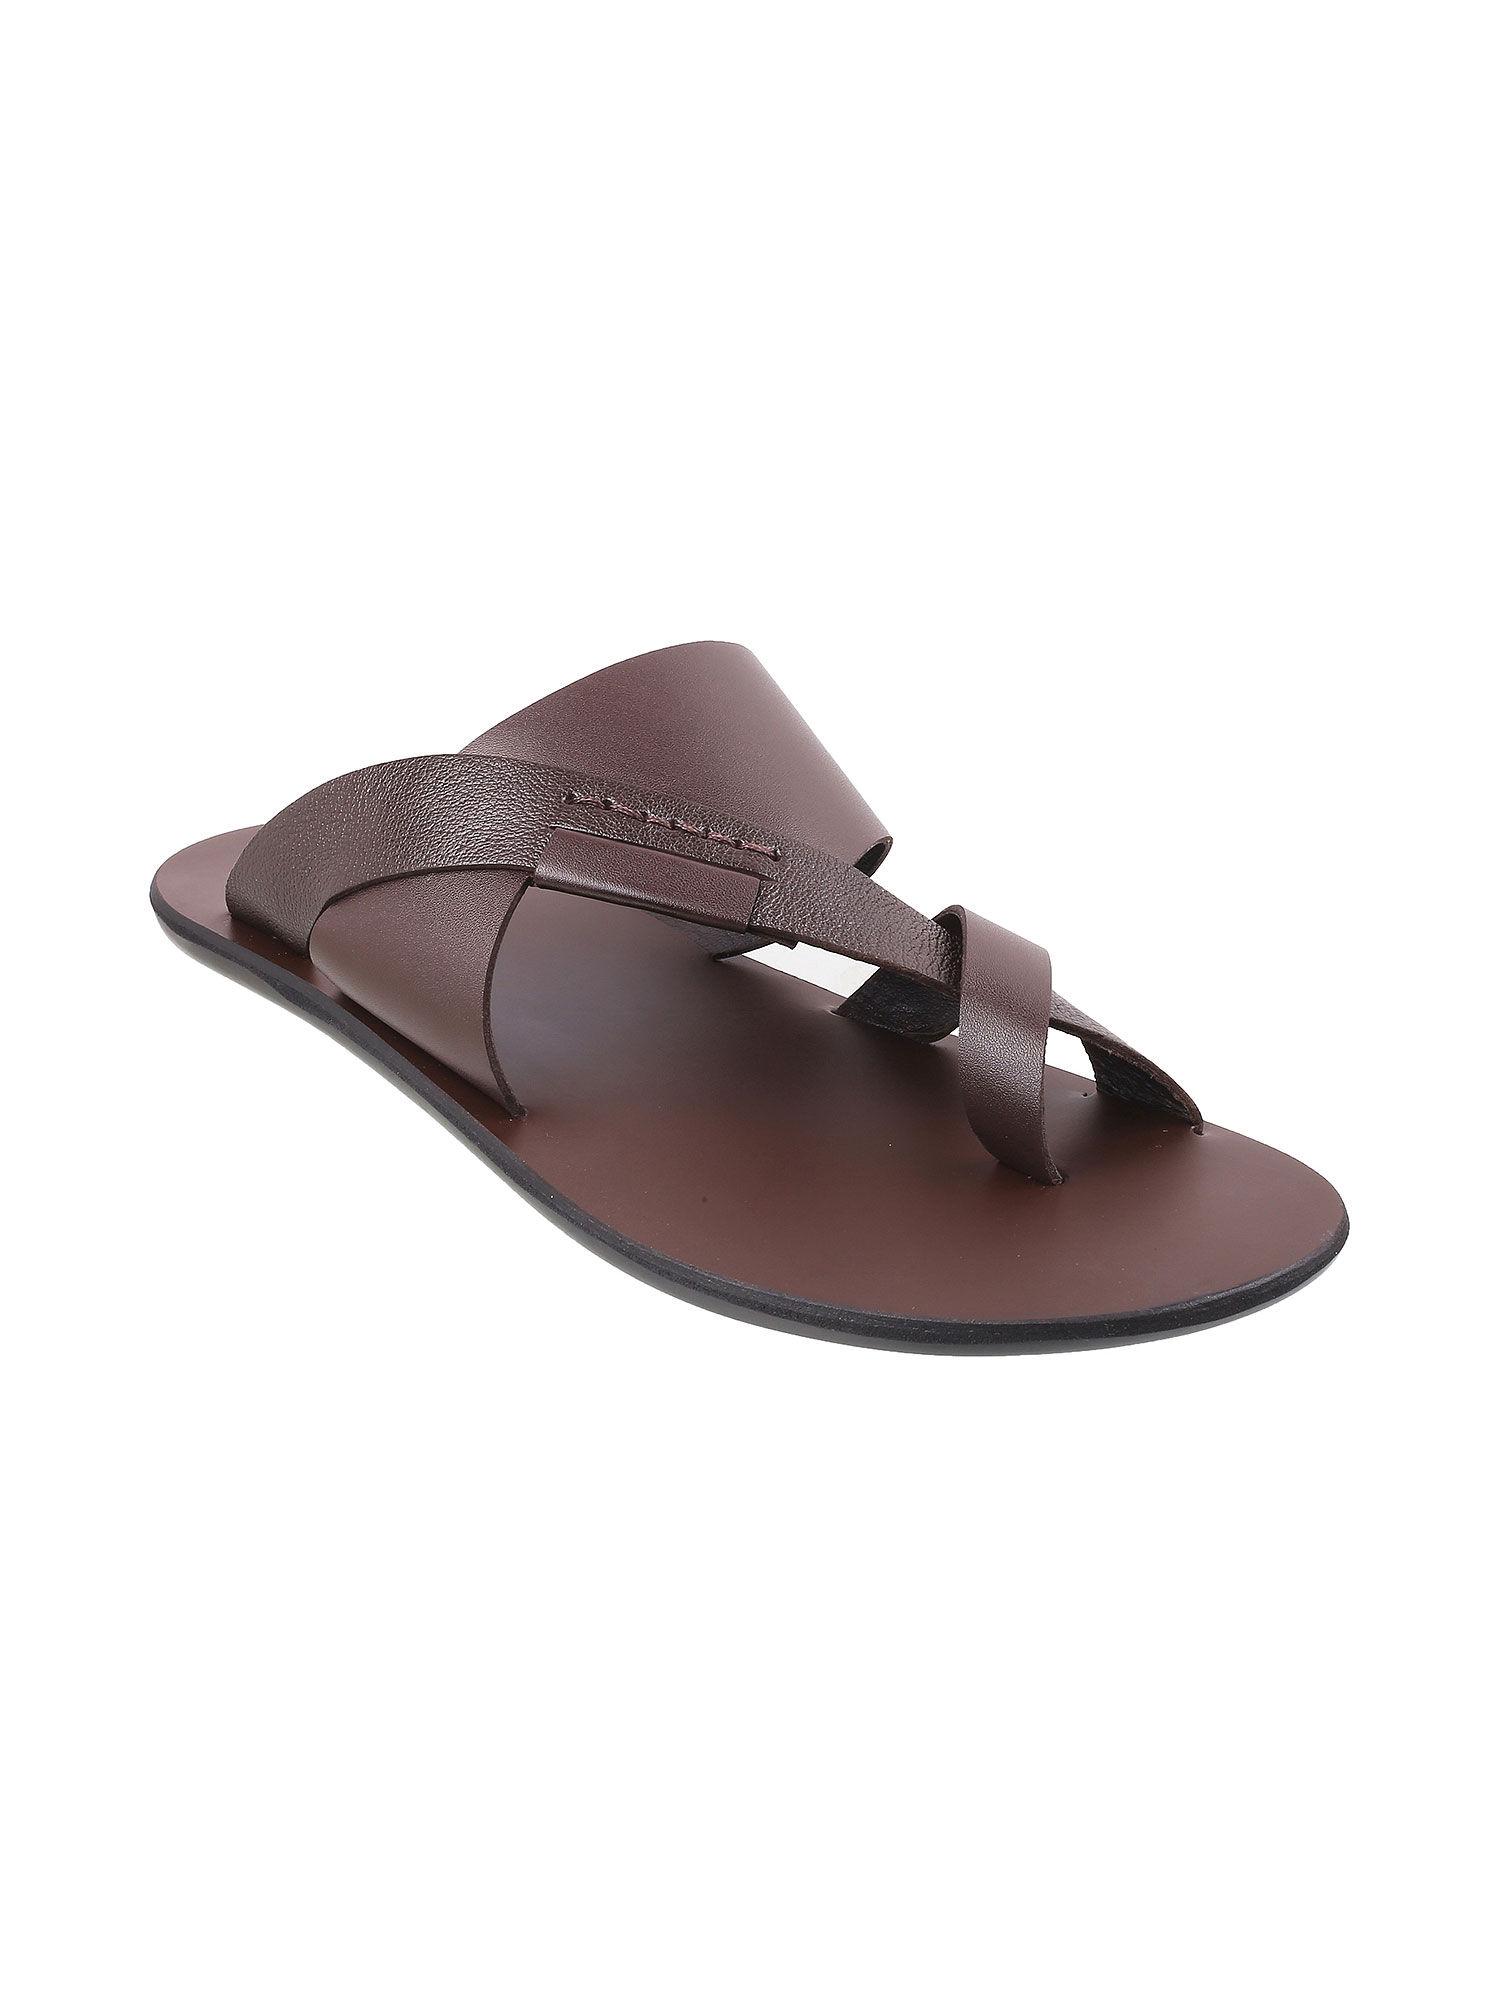 mens-brown-flat-chappalsmetro-solid-brown-sandals